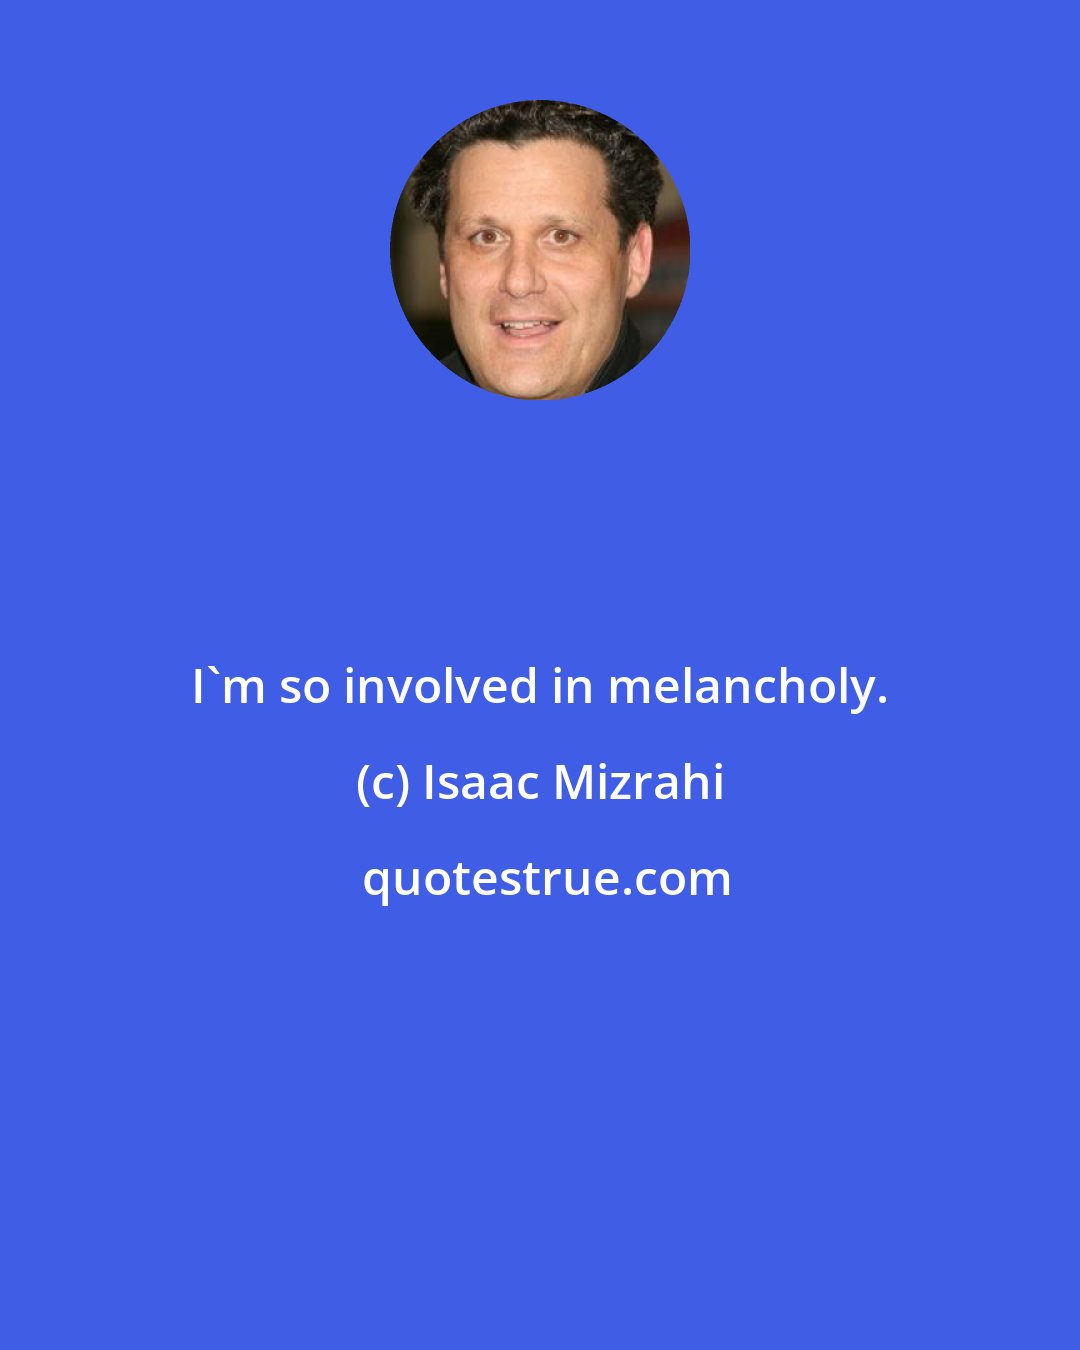 Isaac Mizrahi: I'm so involved in melancholy.